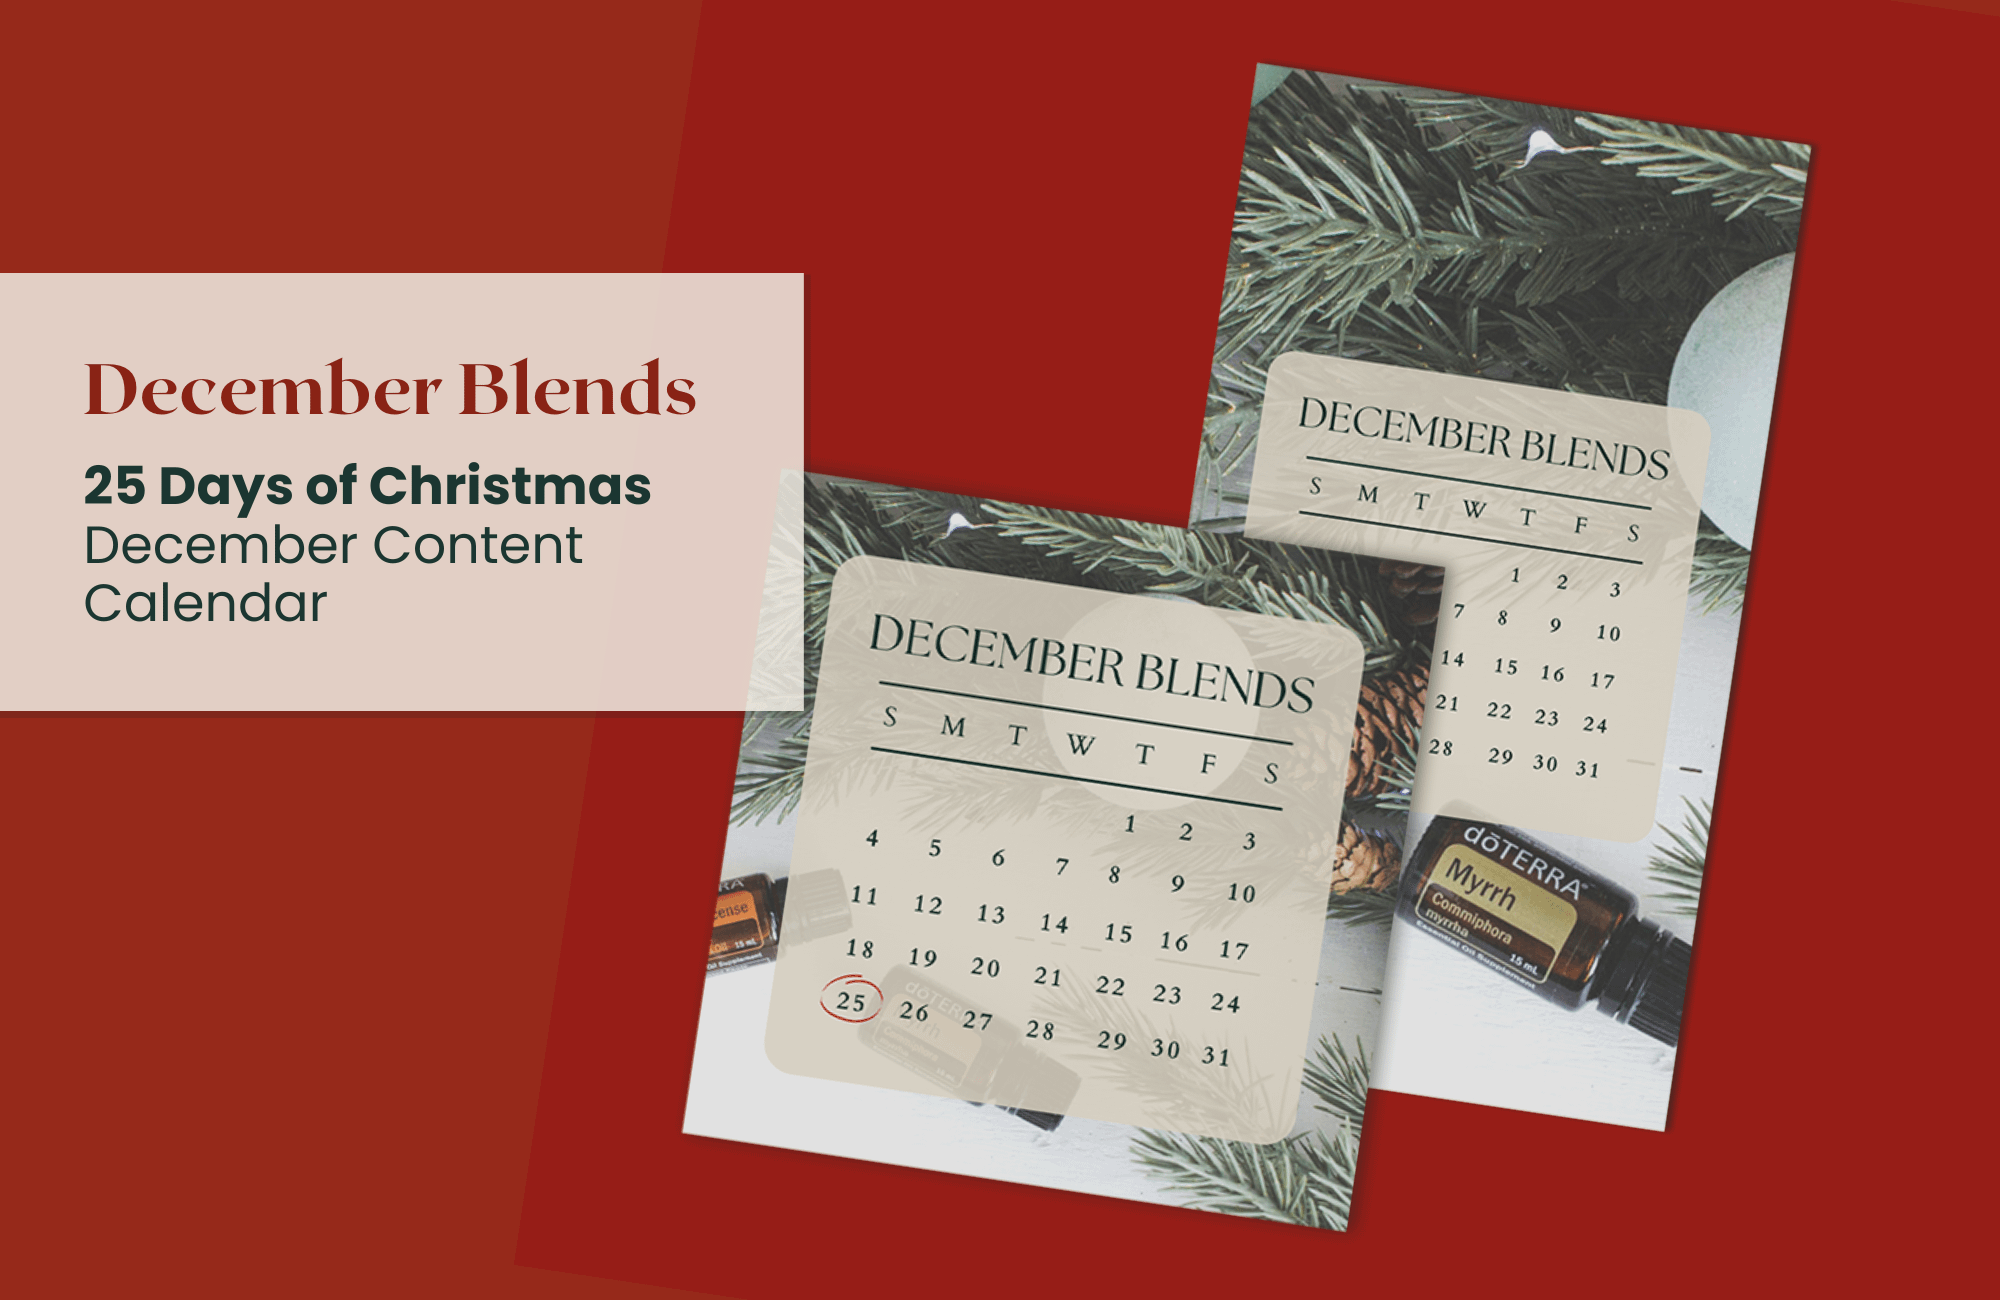 December Blends doTERRA Content Calendar - 25 Days of Christmas Diffuser Recipes